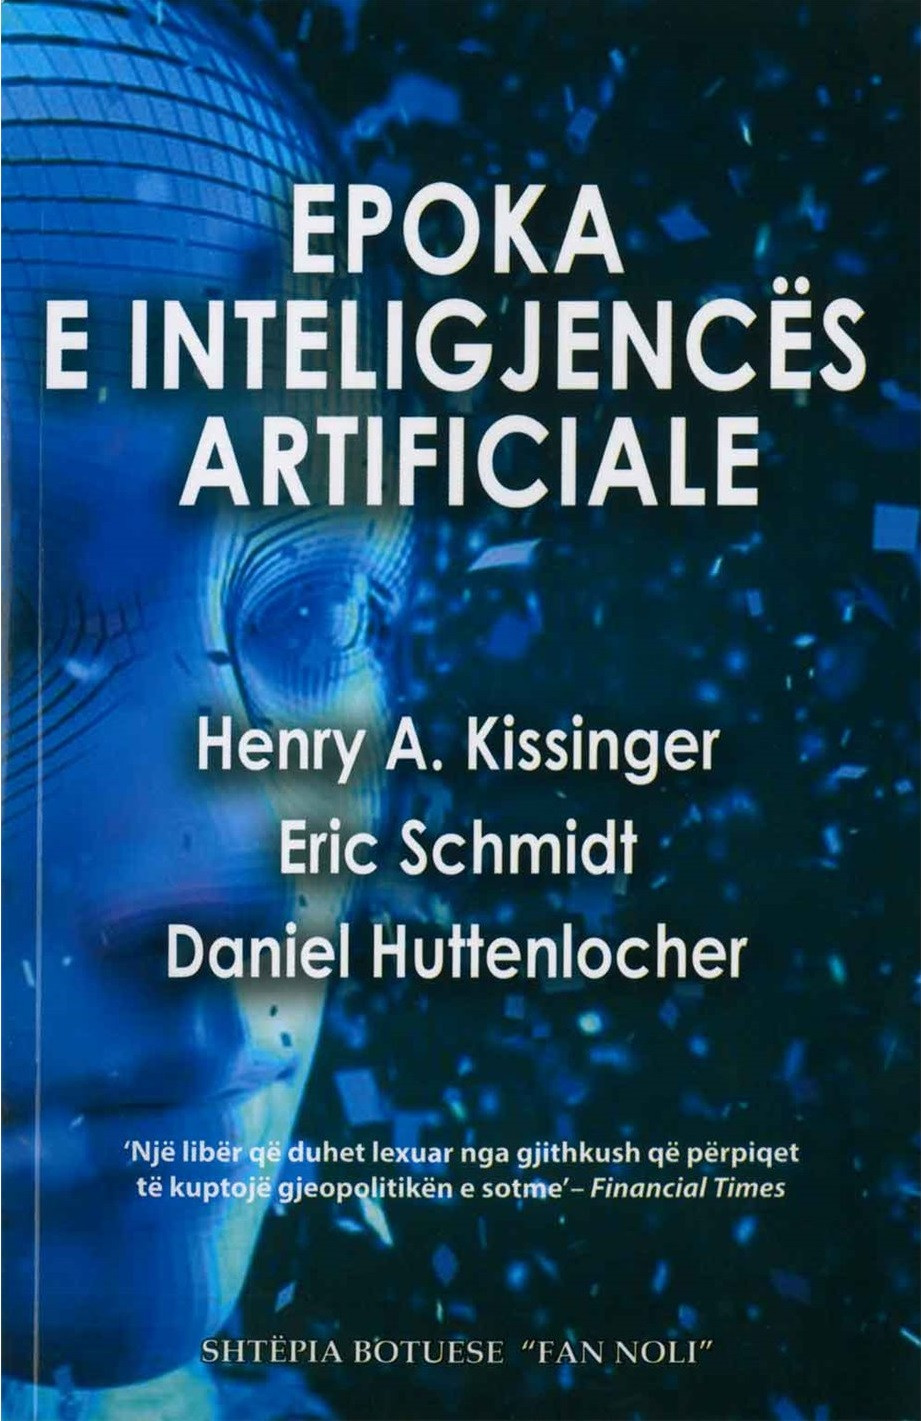 Epoka e inteligjences artificiale